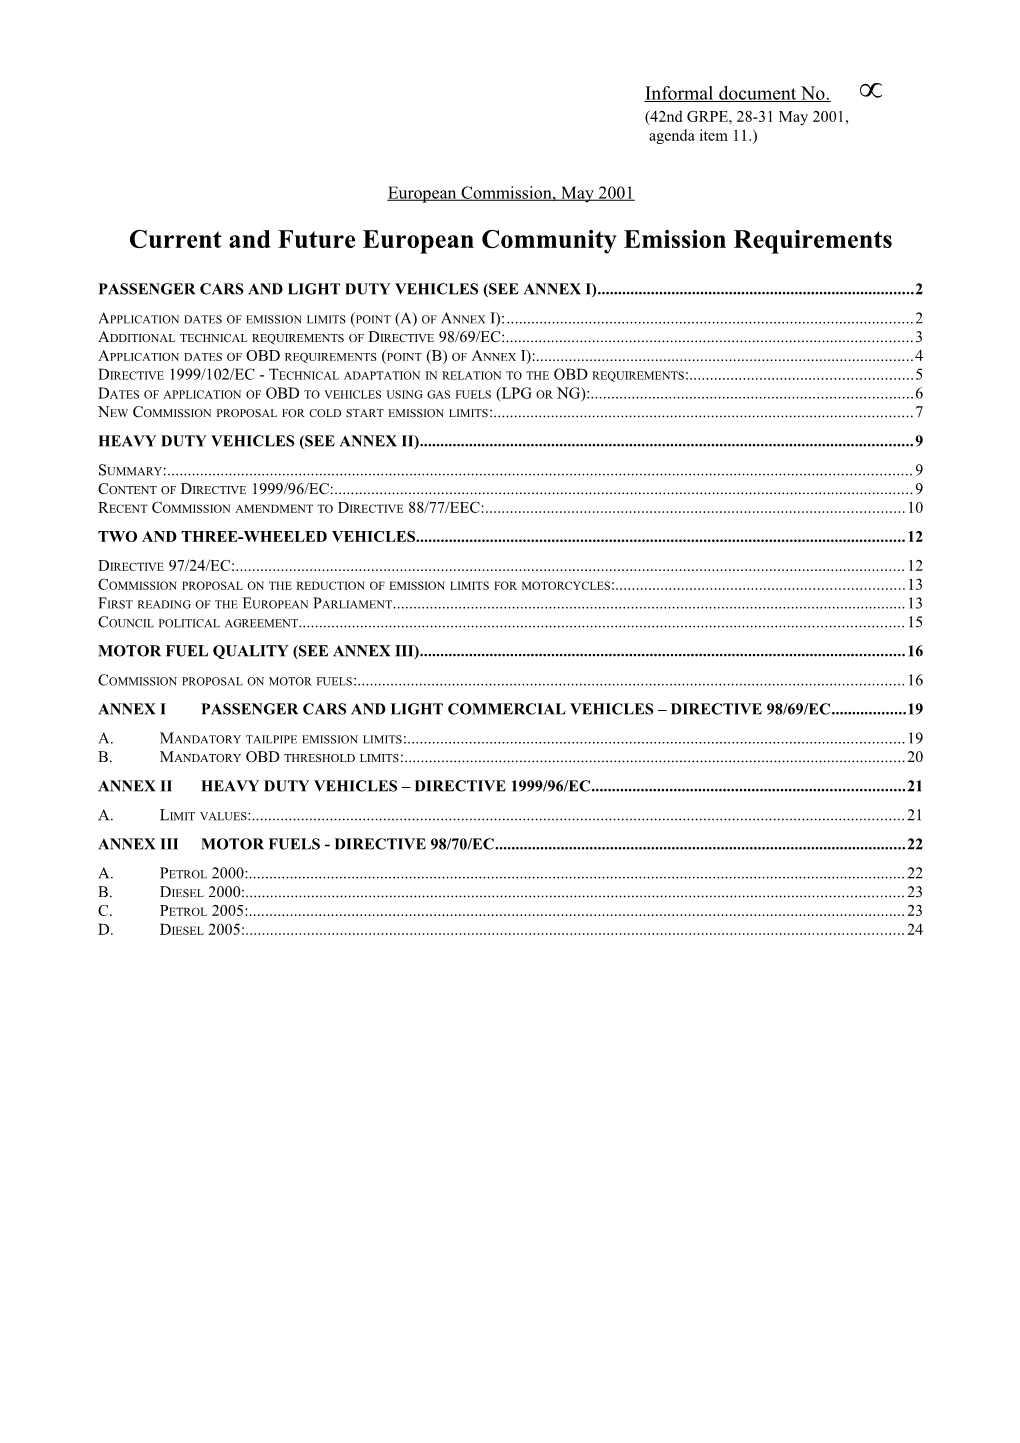 Future European Community Emission Requirements